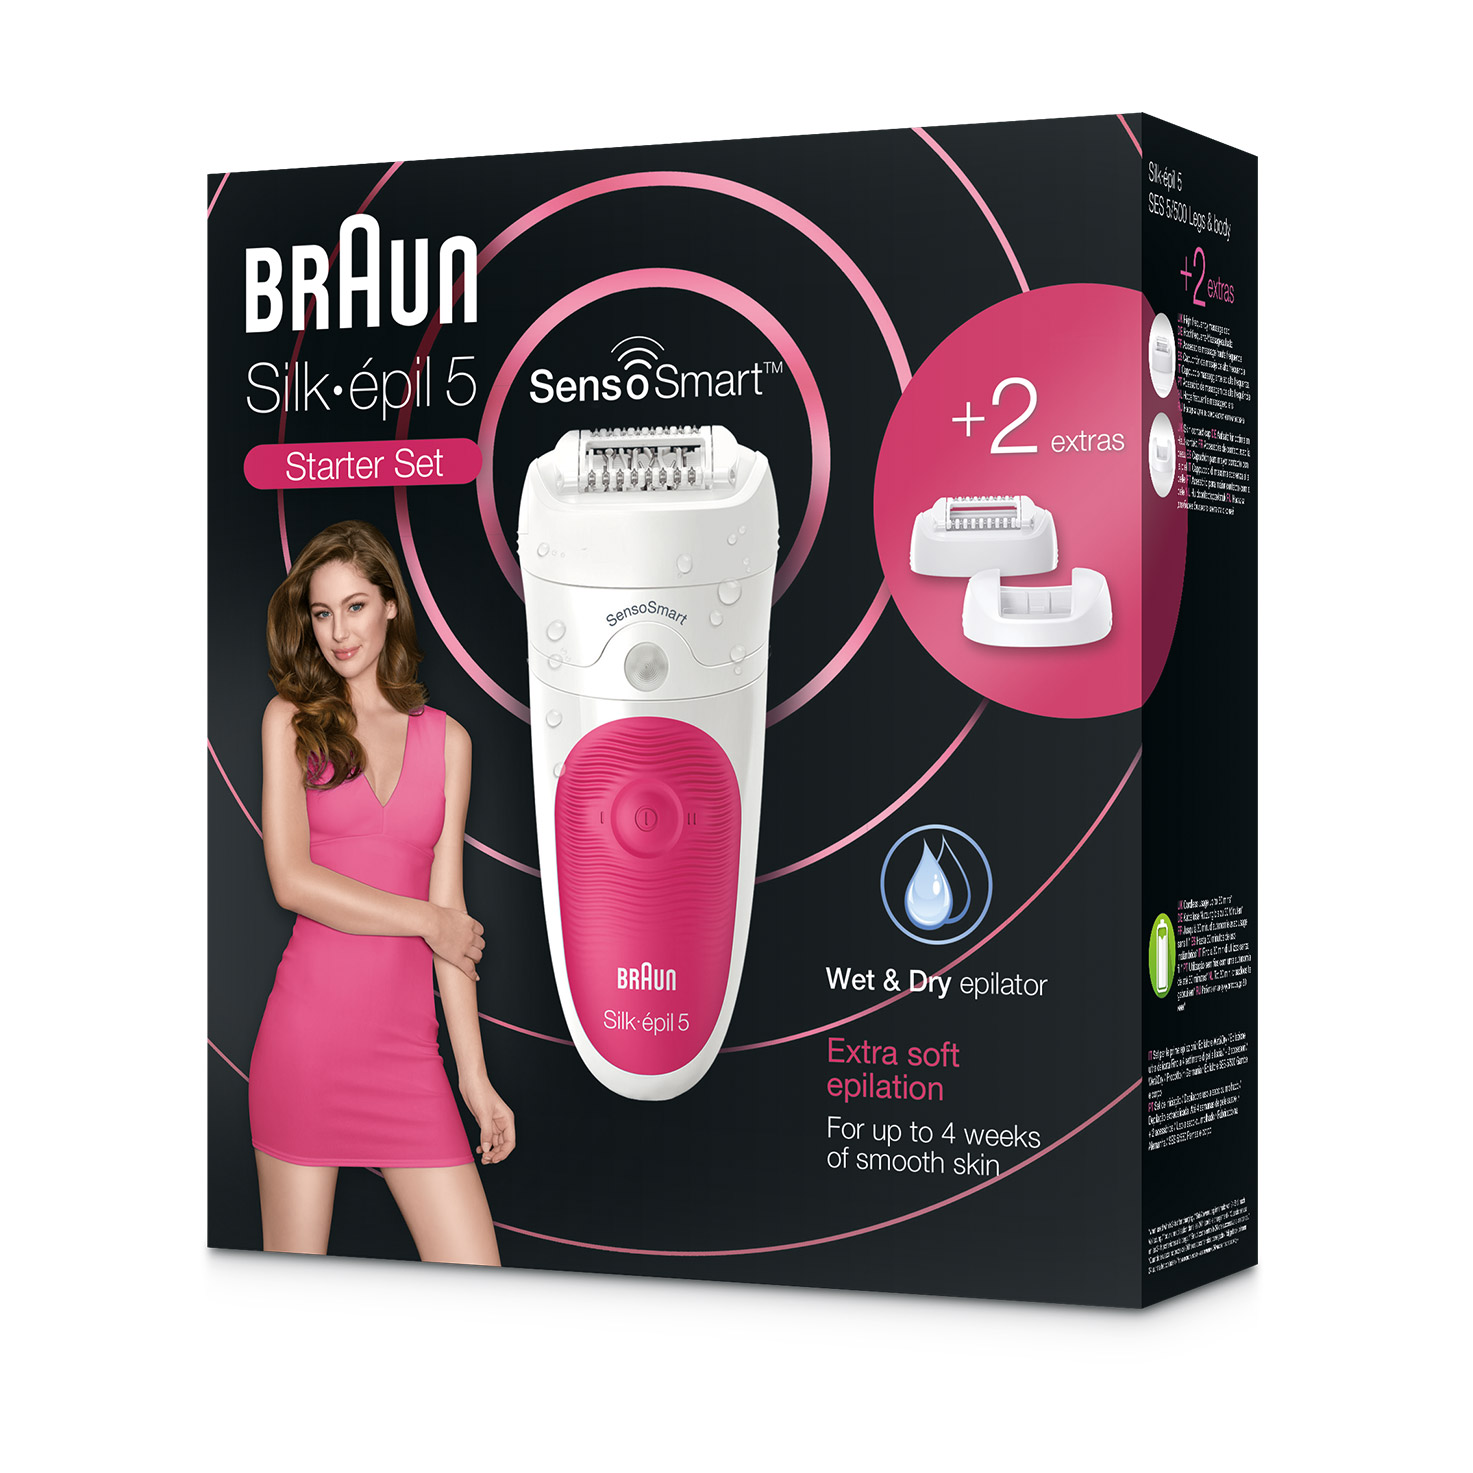 Braun Silk-épil 5 5-531 epilator packaging